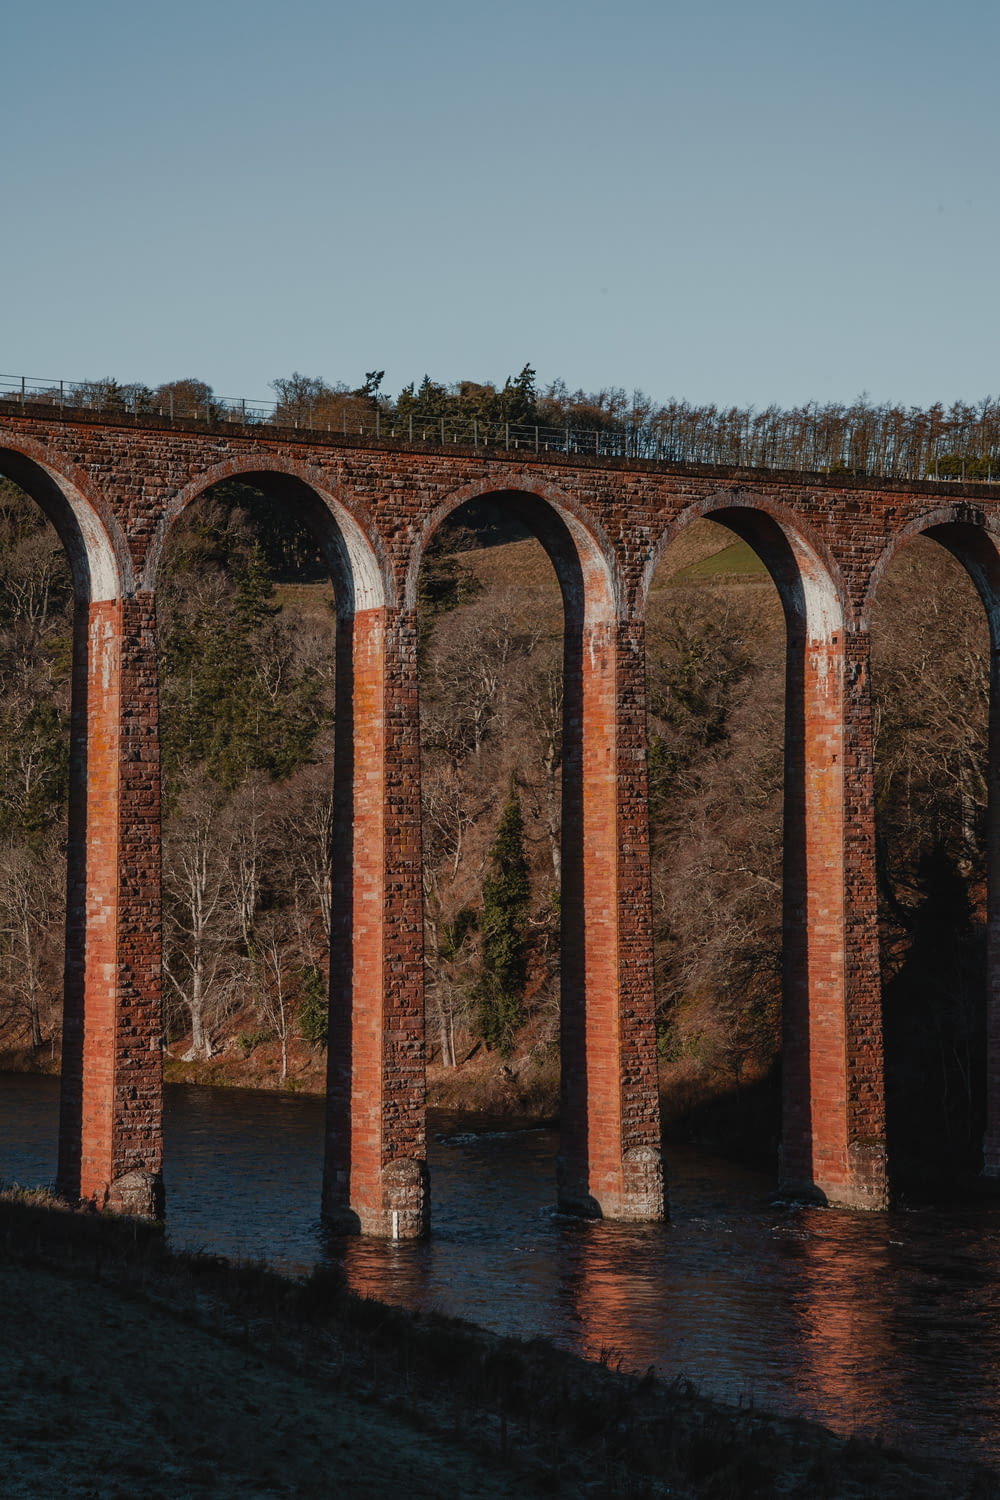 an old brick train bridge over a river